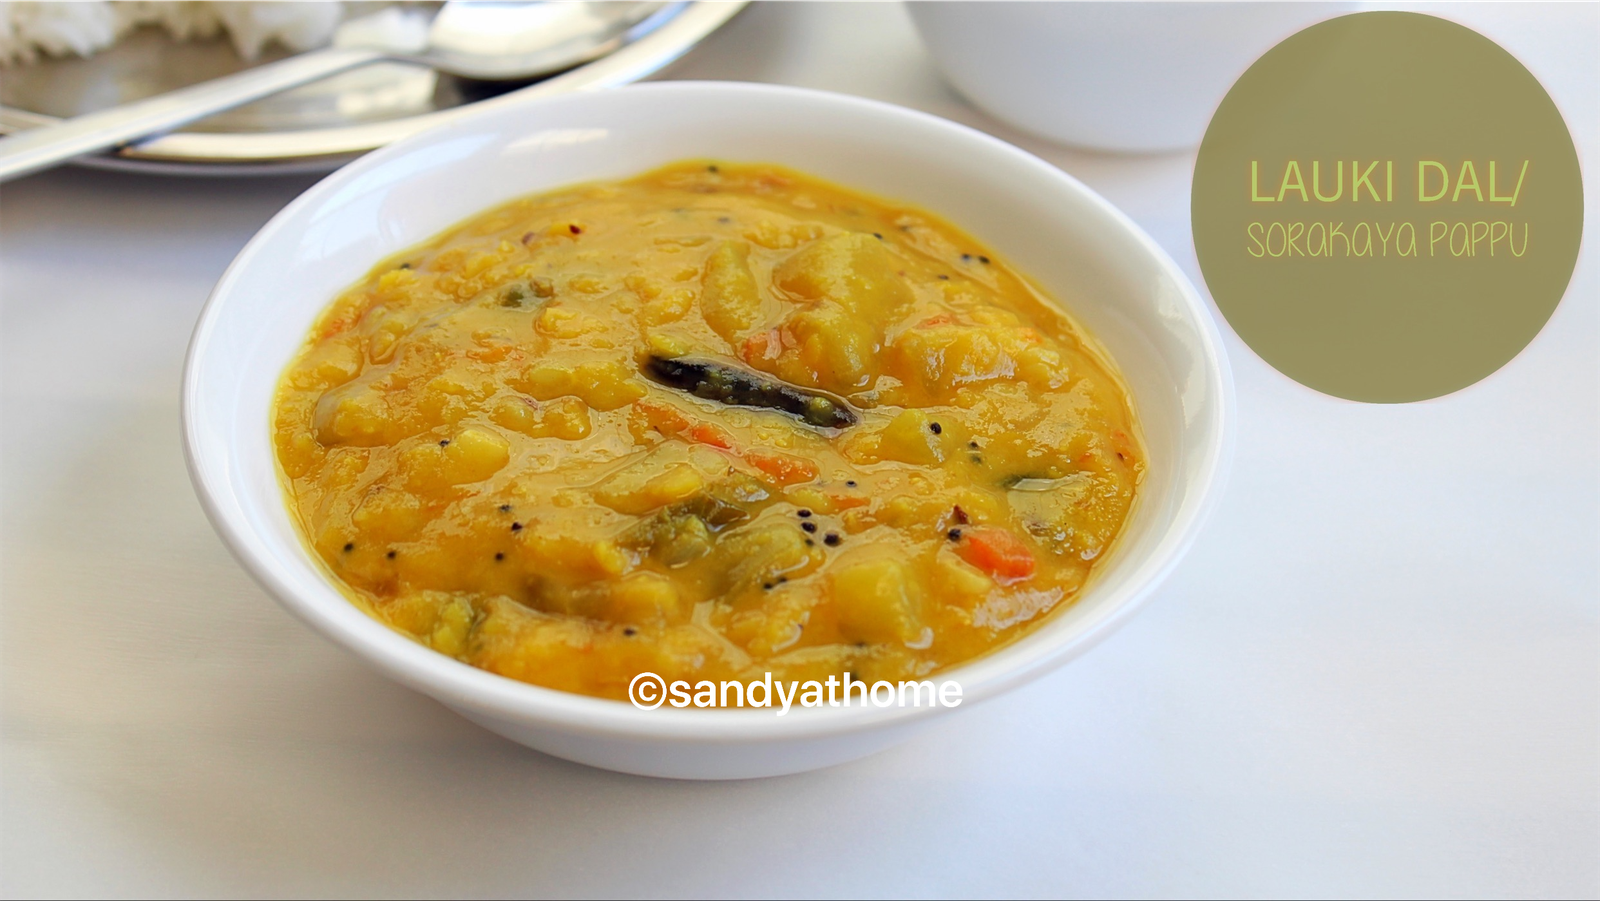 Lauki dal recipe, Sorakaya pappu - Sandhya's recipes